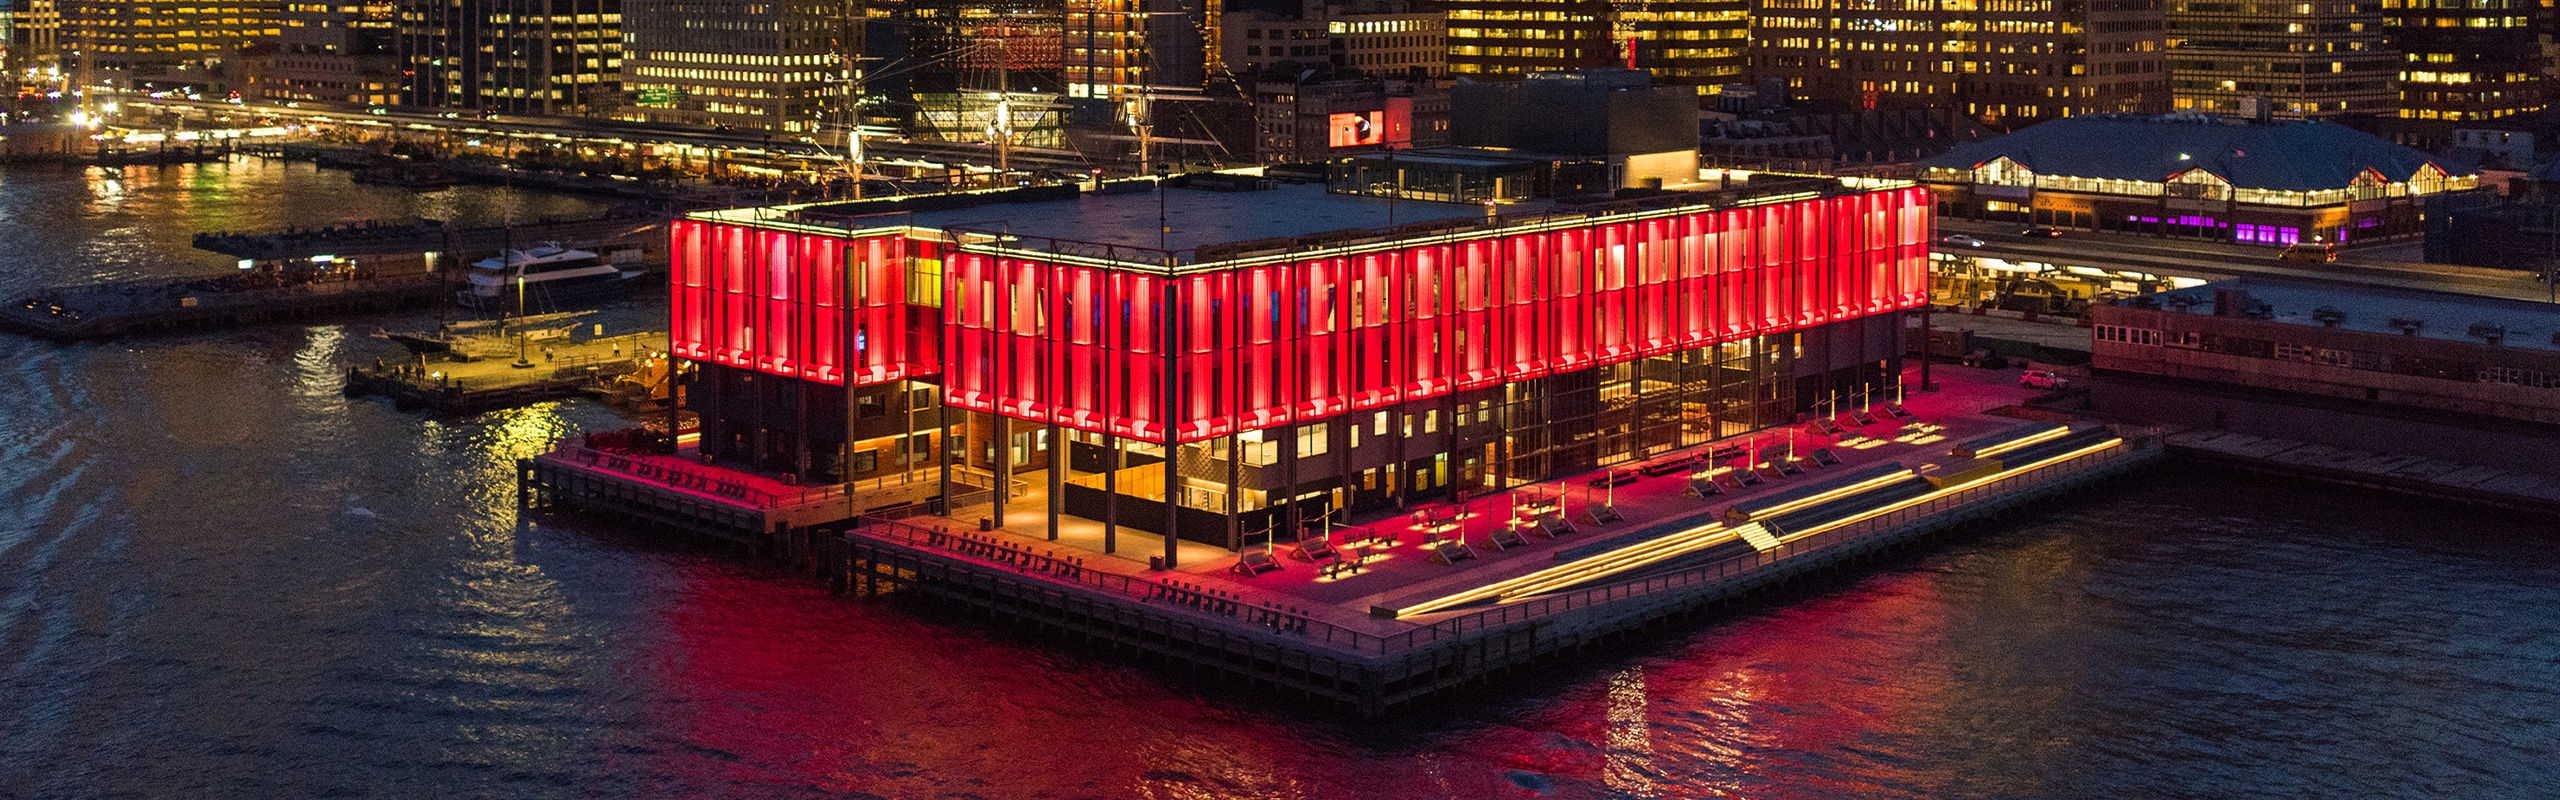 Pier 17 lit up in red lights